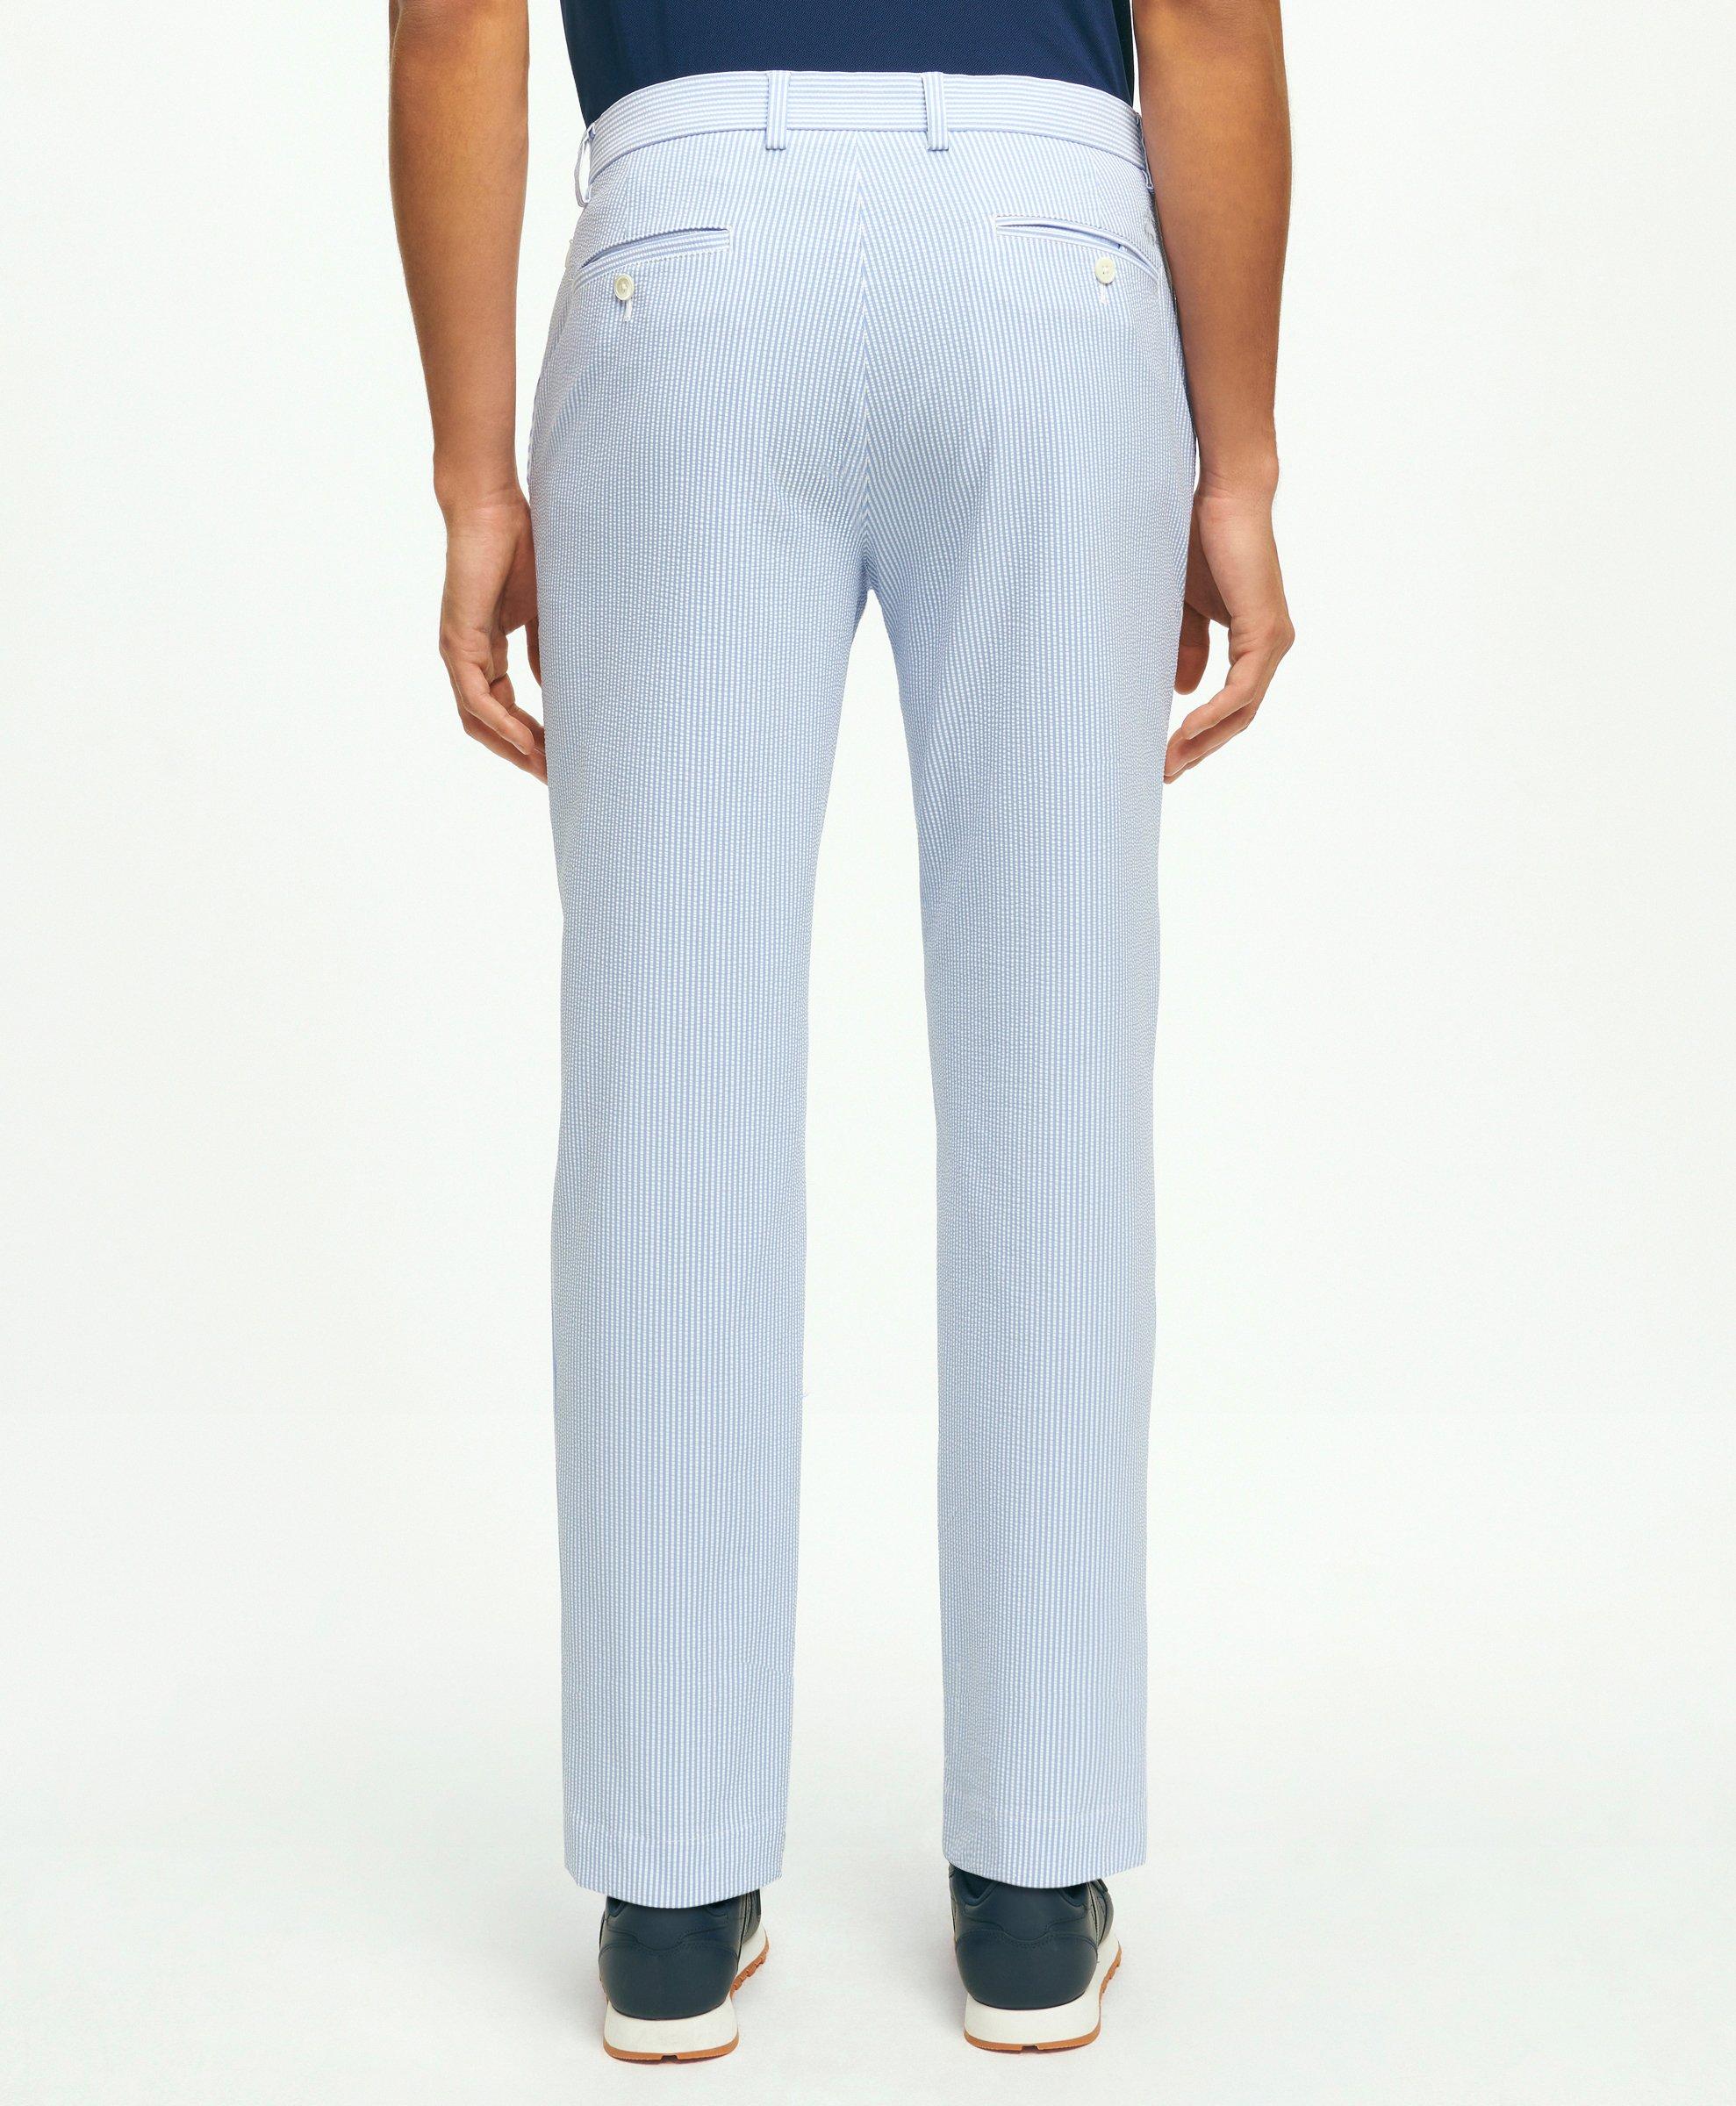 Gymboree pants  Linen blend pants, Seersucker pants, Embroidered pants